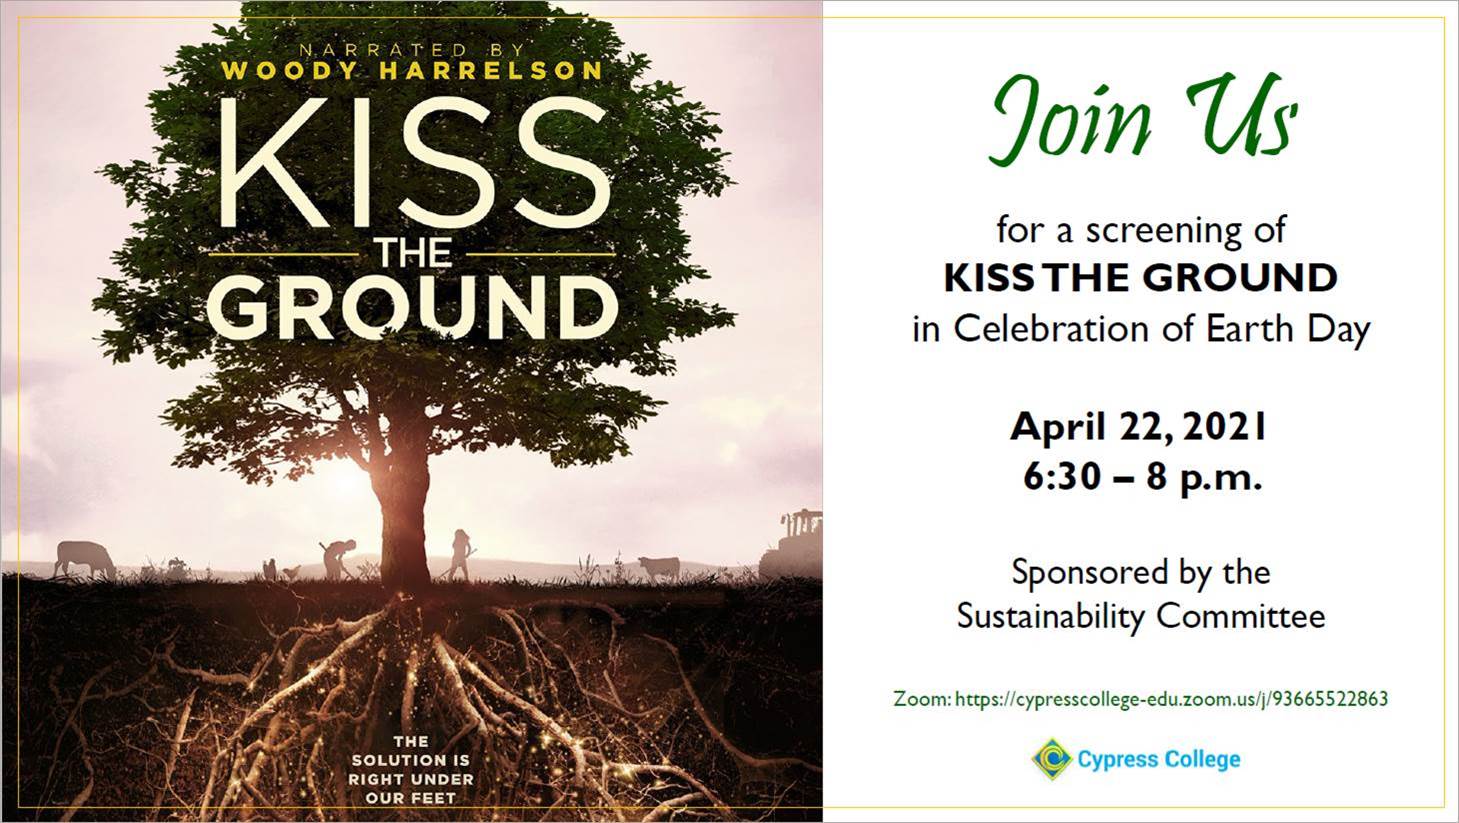 Kiss the Ground movie screening with tree